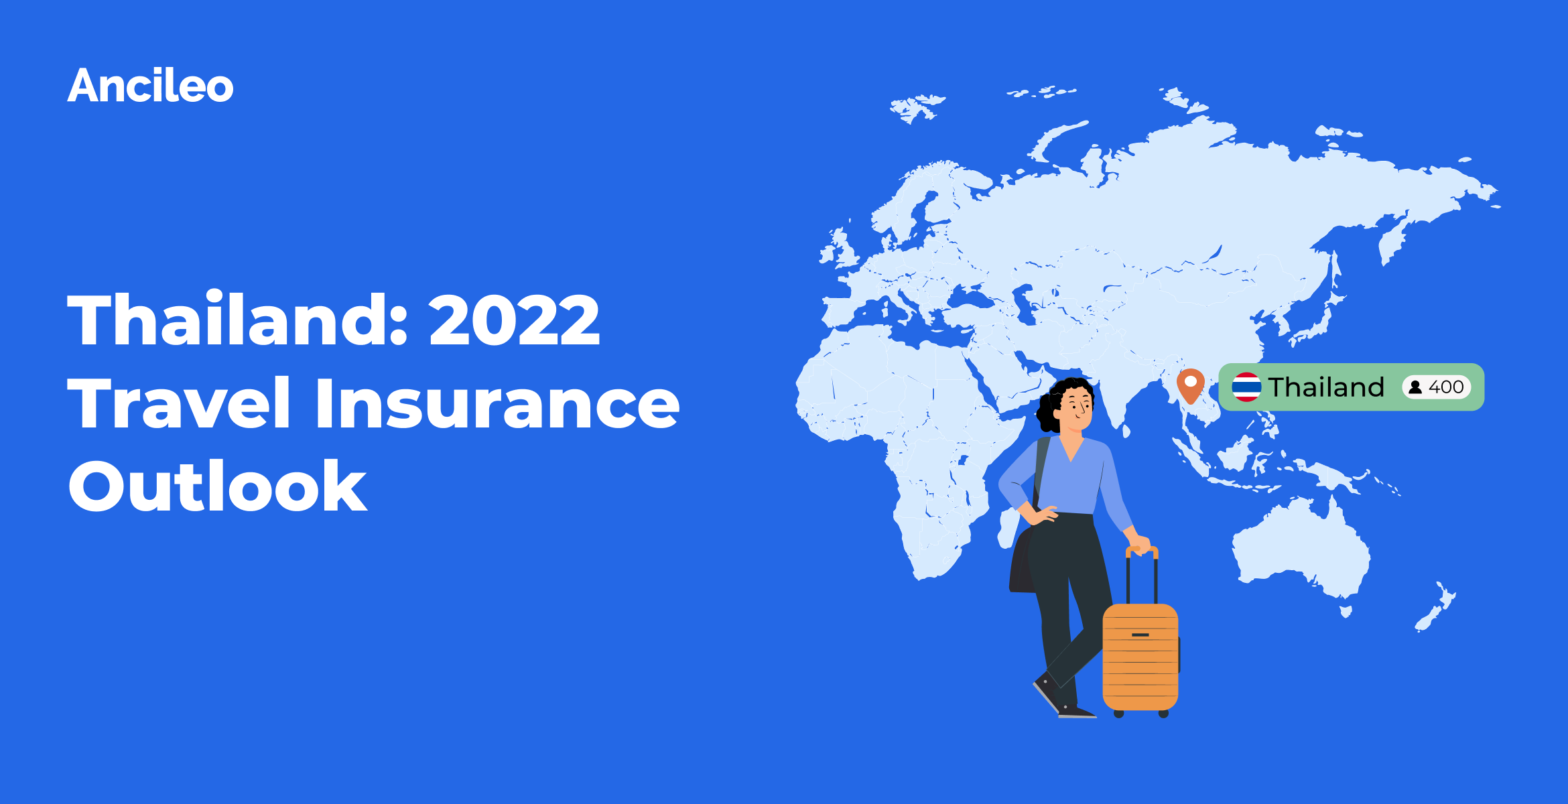 Thailand: 2022 Travel Insurance Outlook